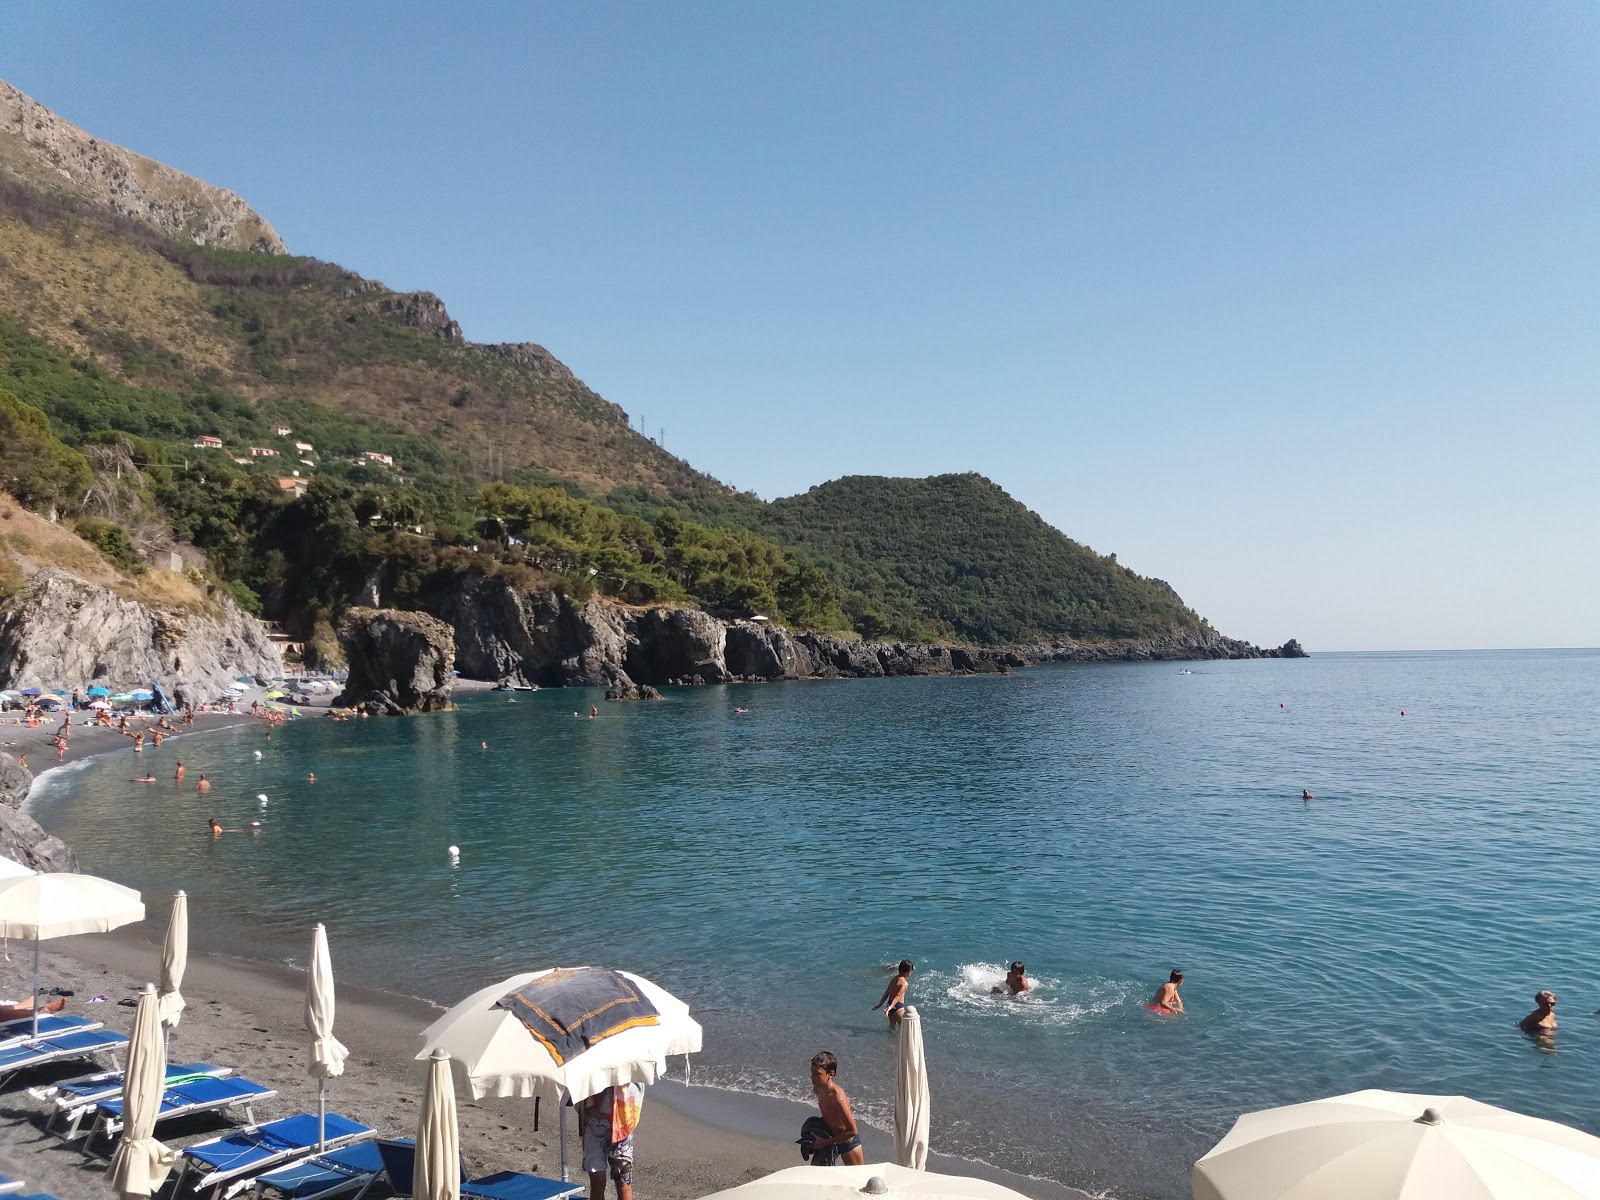 Photo of Spiaggia di Santa Teresa and its beautiful scenery